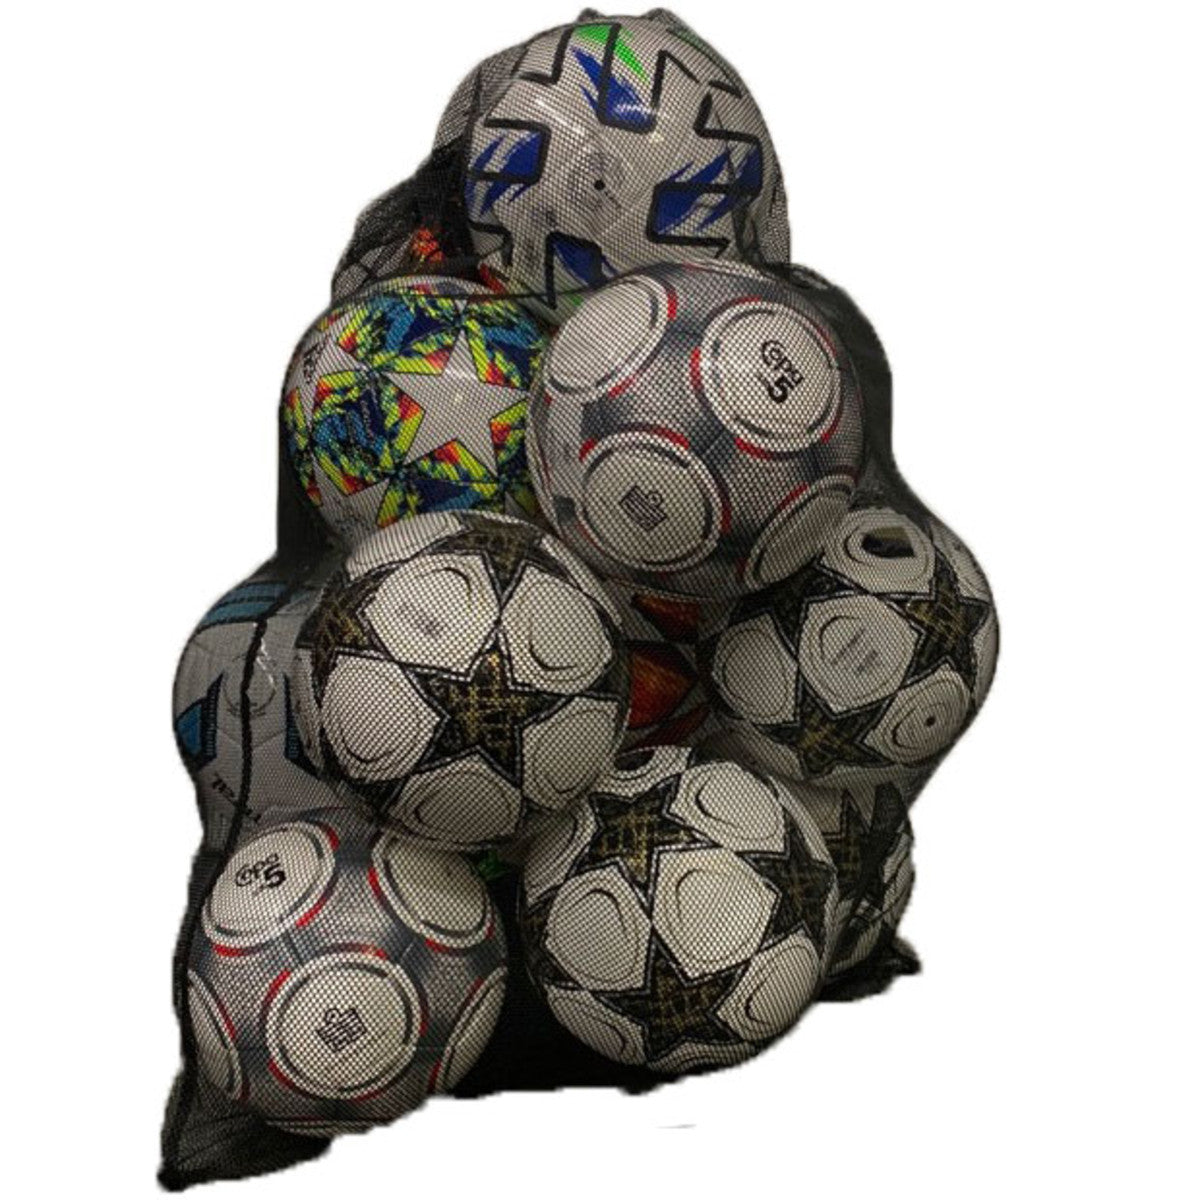 Admiral Mesh Ball Carry Bag (18-20 balls)